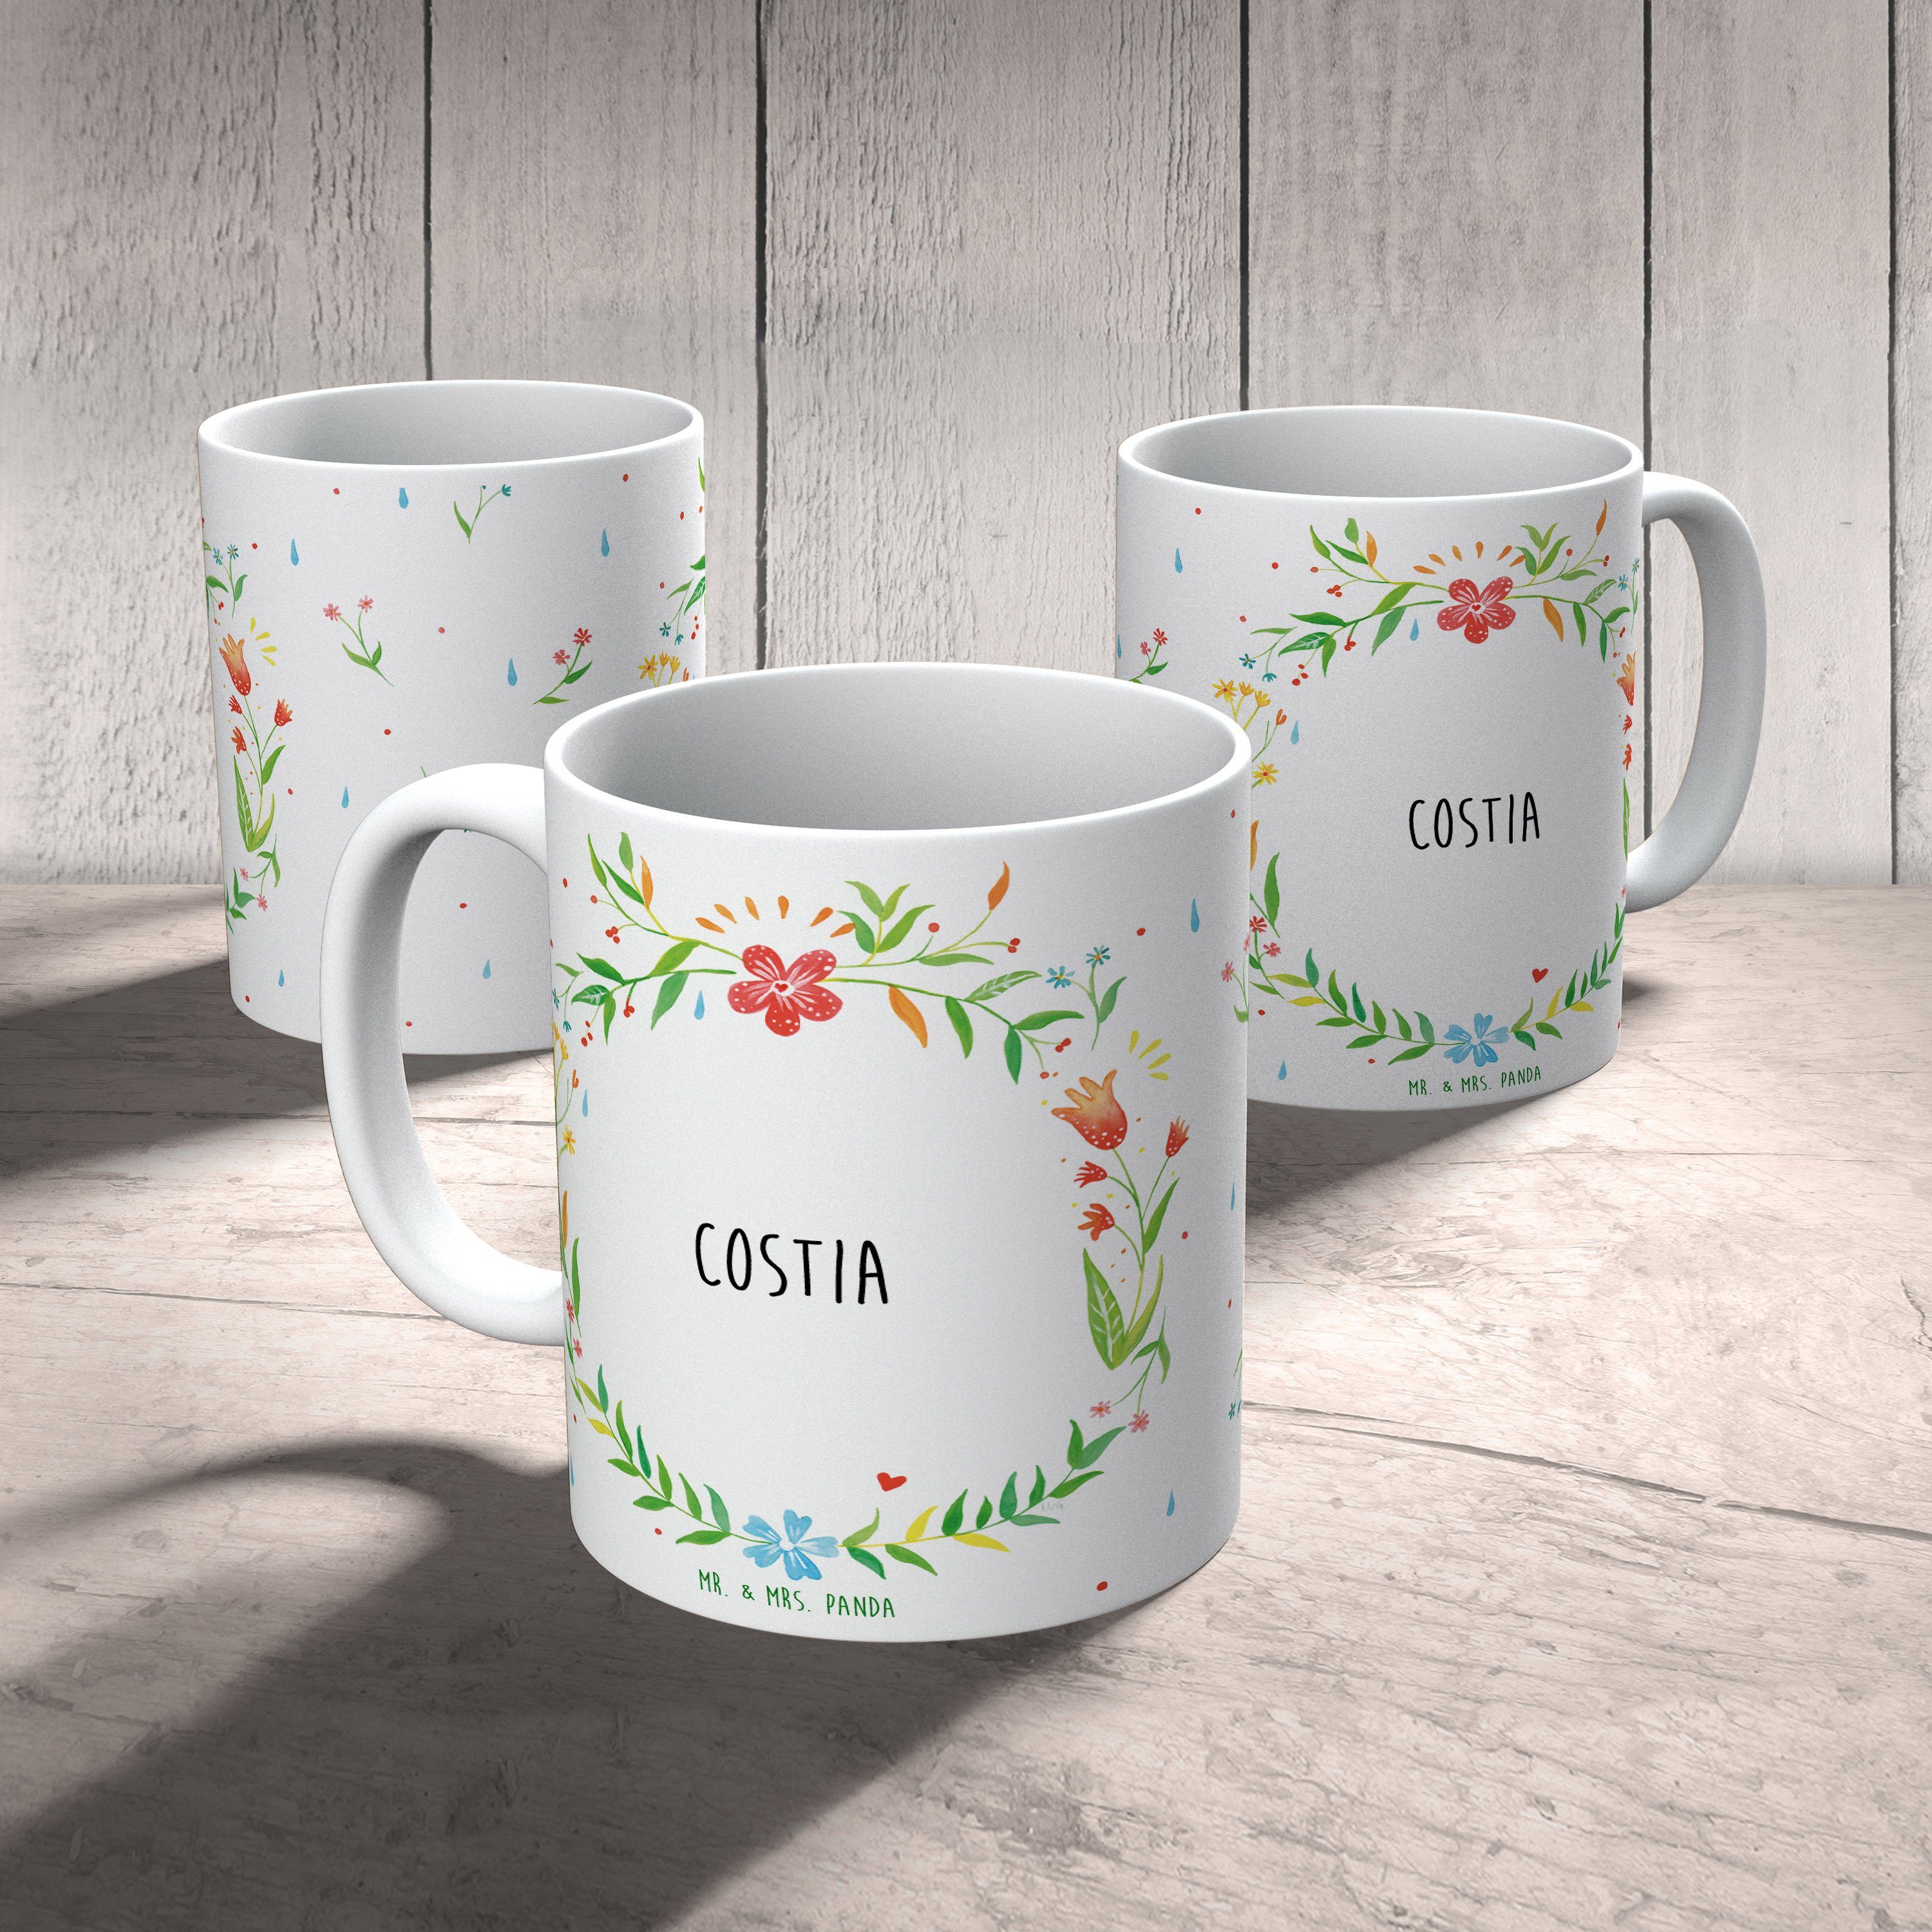 Costia & Tasse - Mrs. Porzellantass, Geschenk, Tasse, Mr. Panda Kaffeebecher, Keramik Geschenk Tasse,